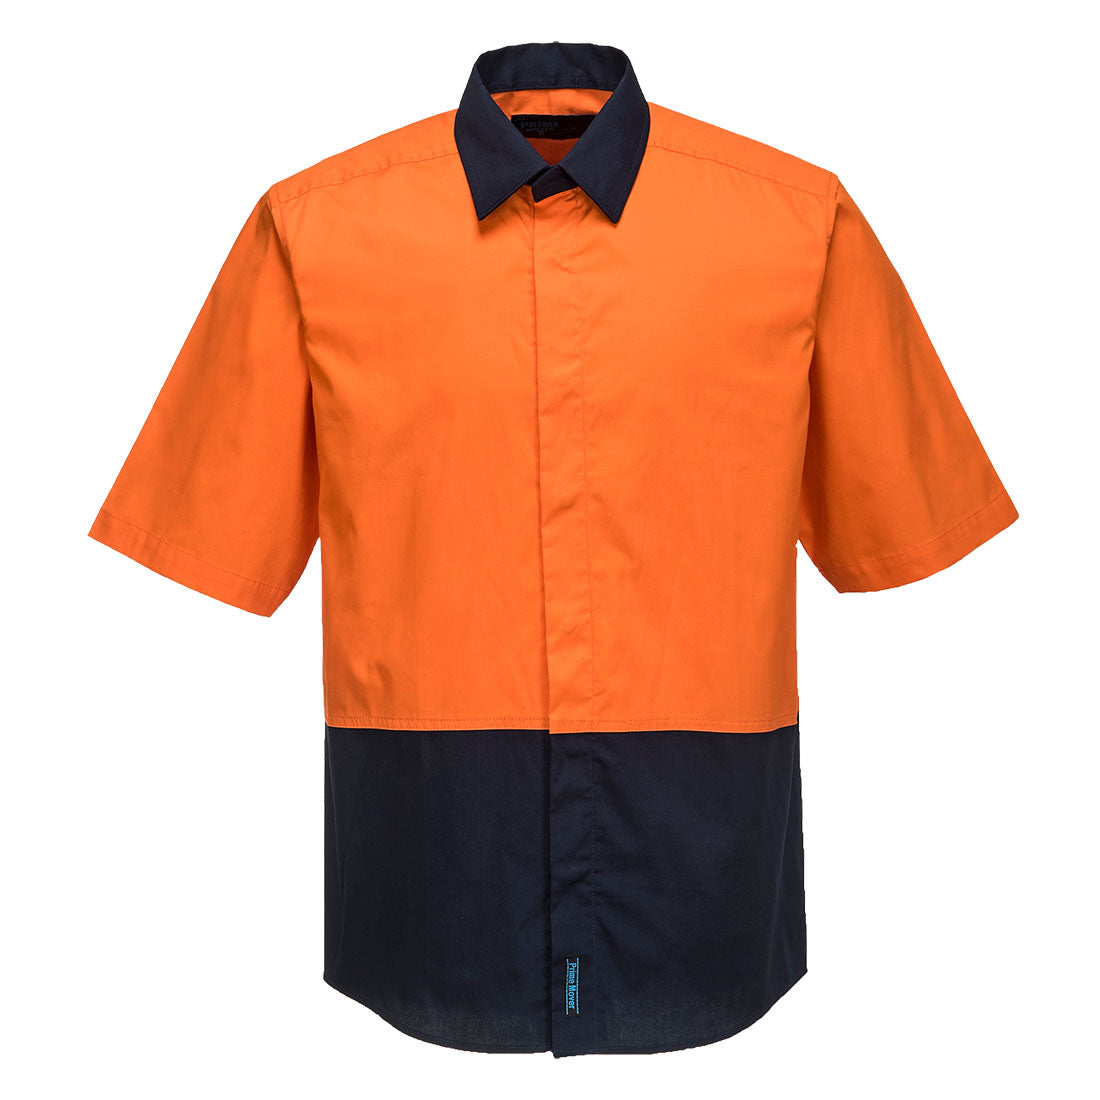 MF152 Food Industry Lightweight Cotton Shirt